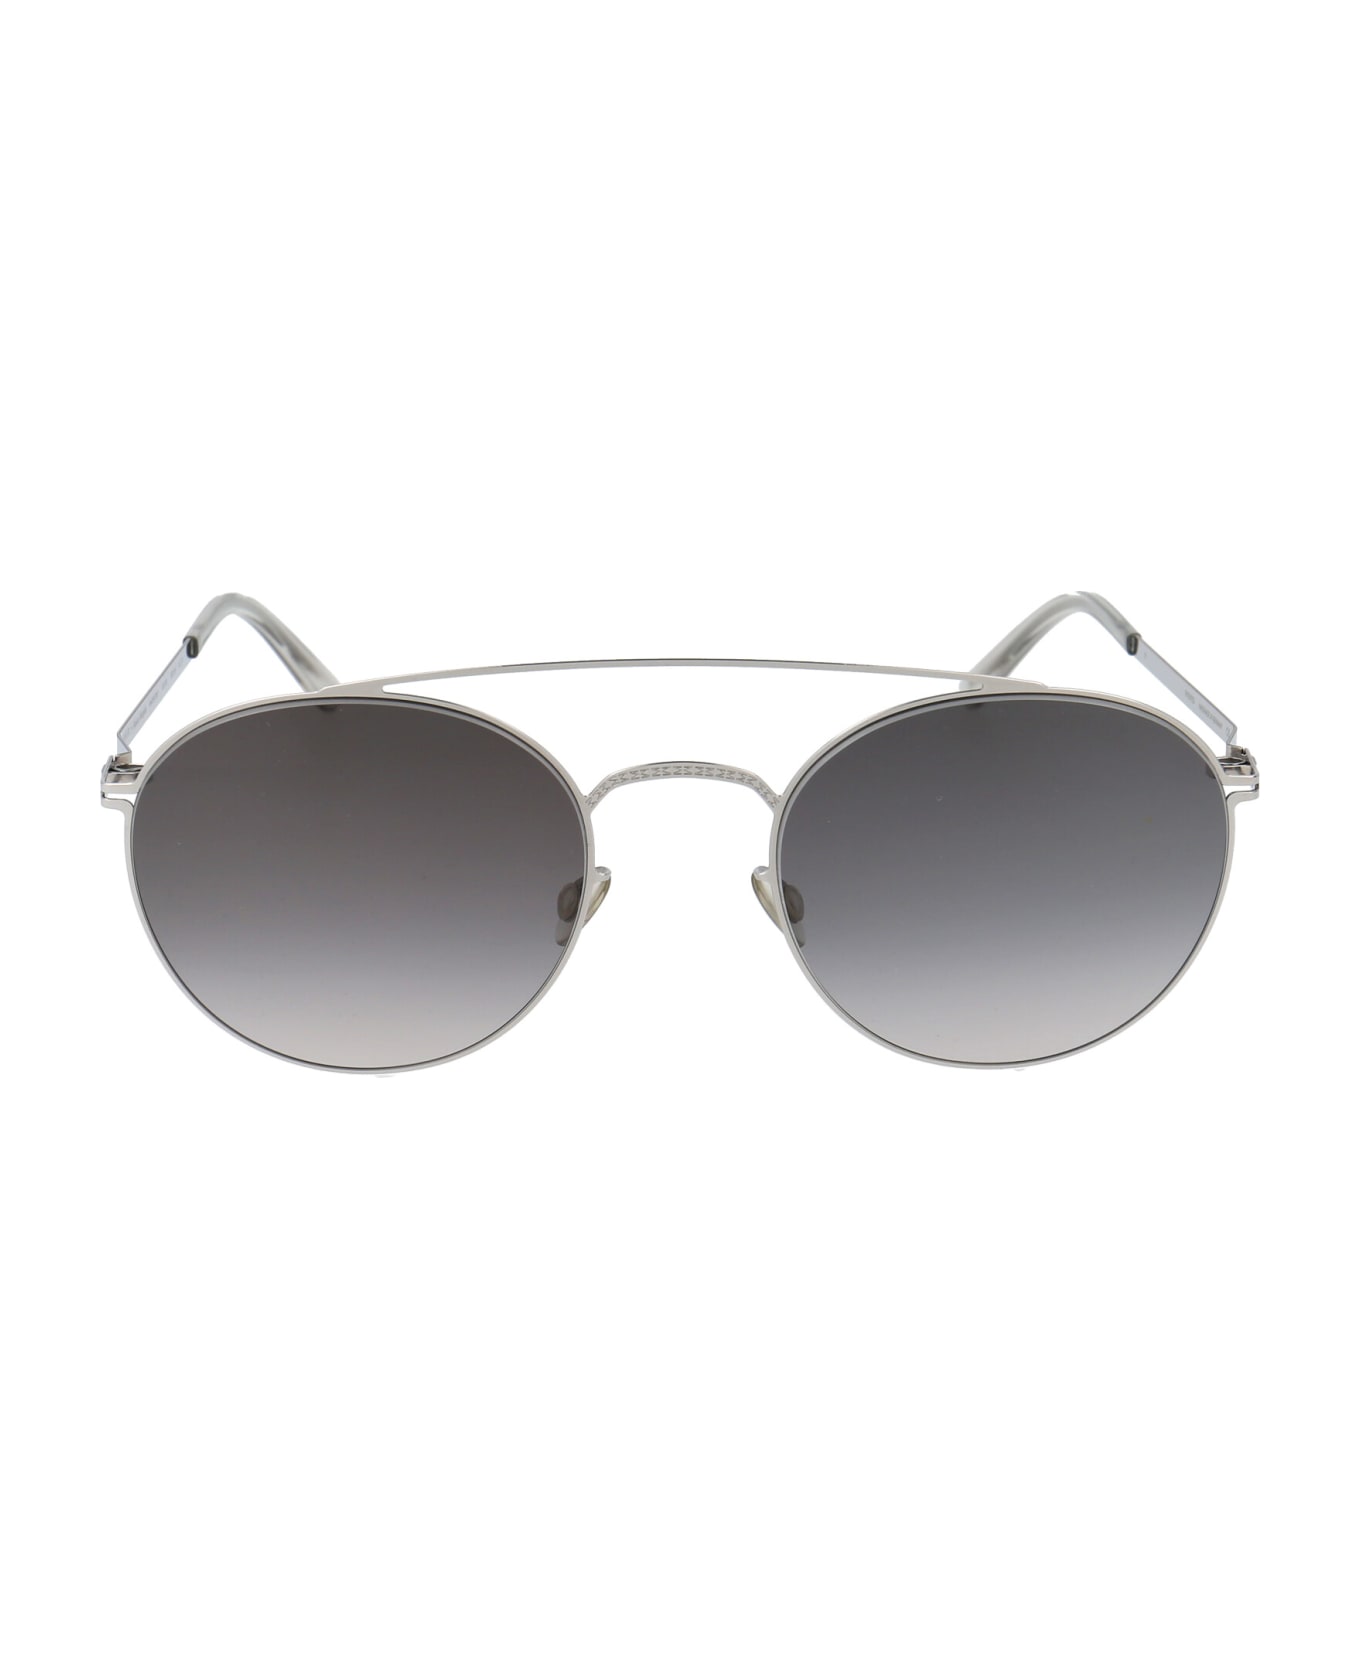 Mykita Mmcraft007 Sunglasses - 051 SHINYSILVER | GREY GRADIENT